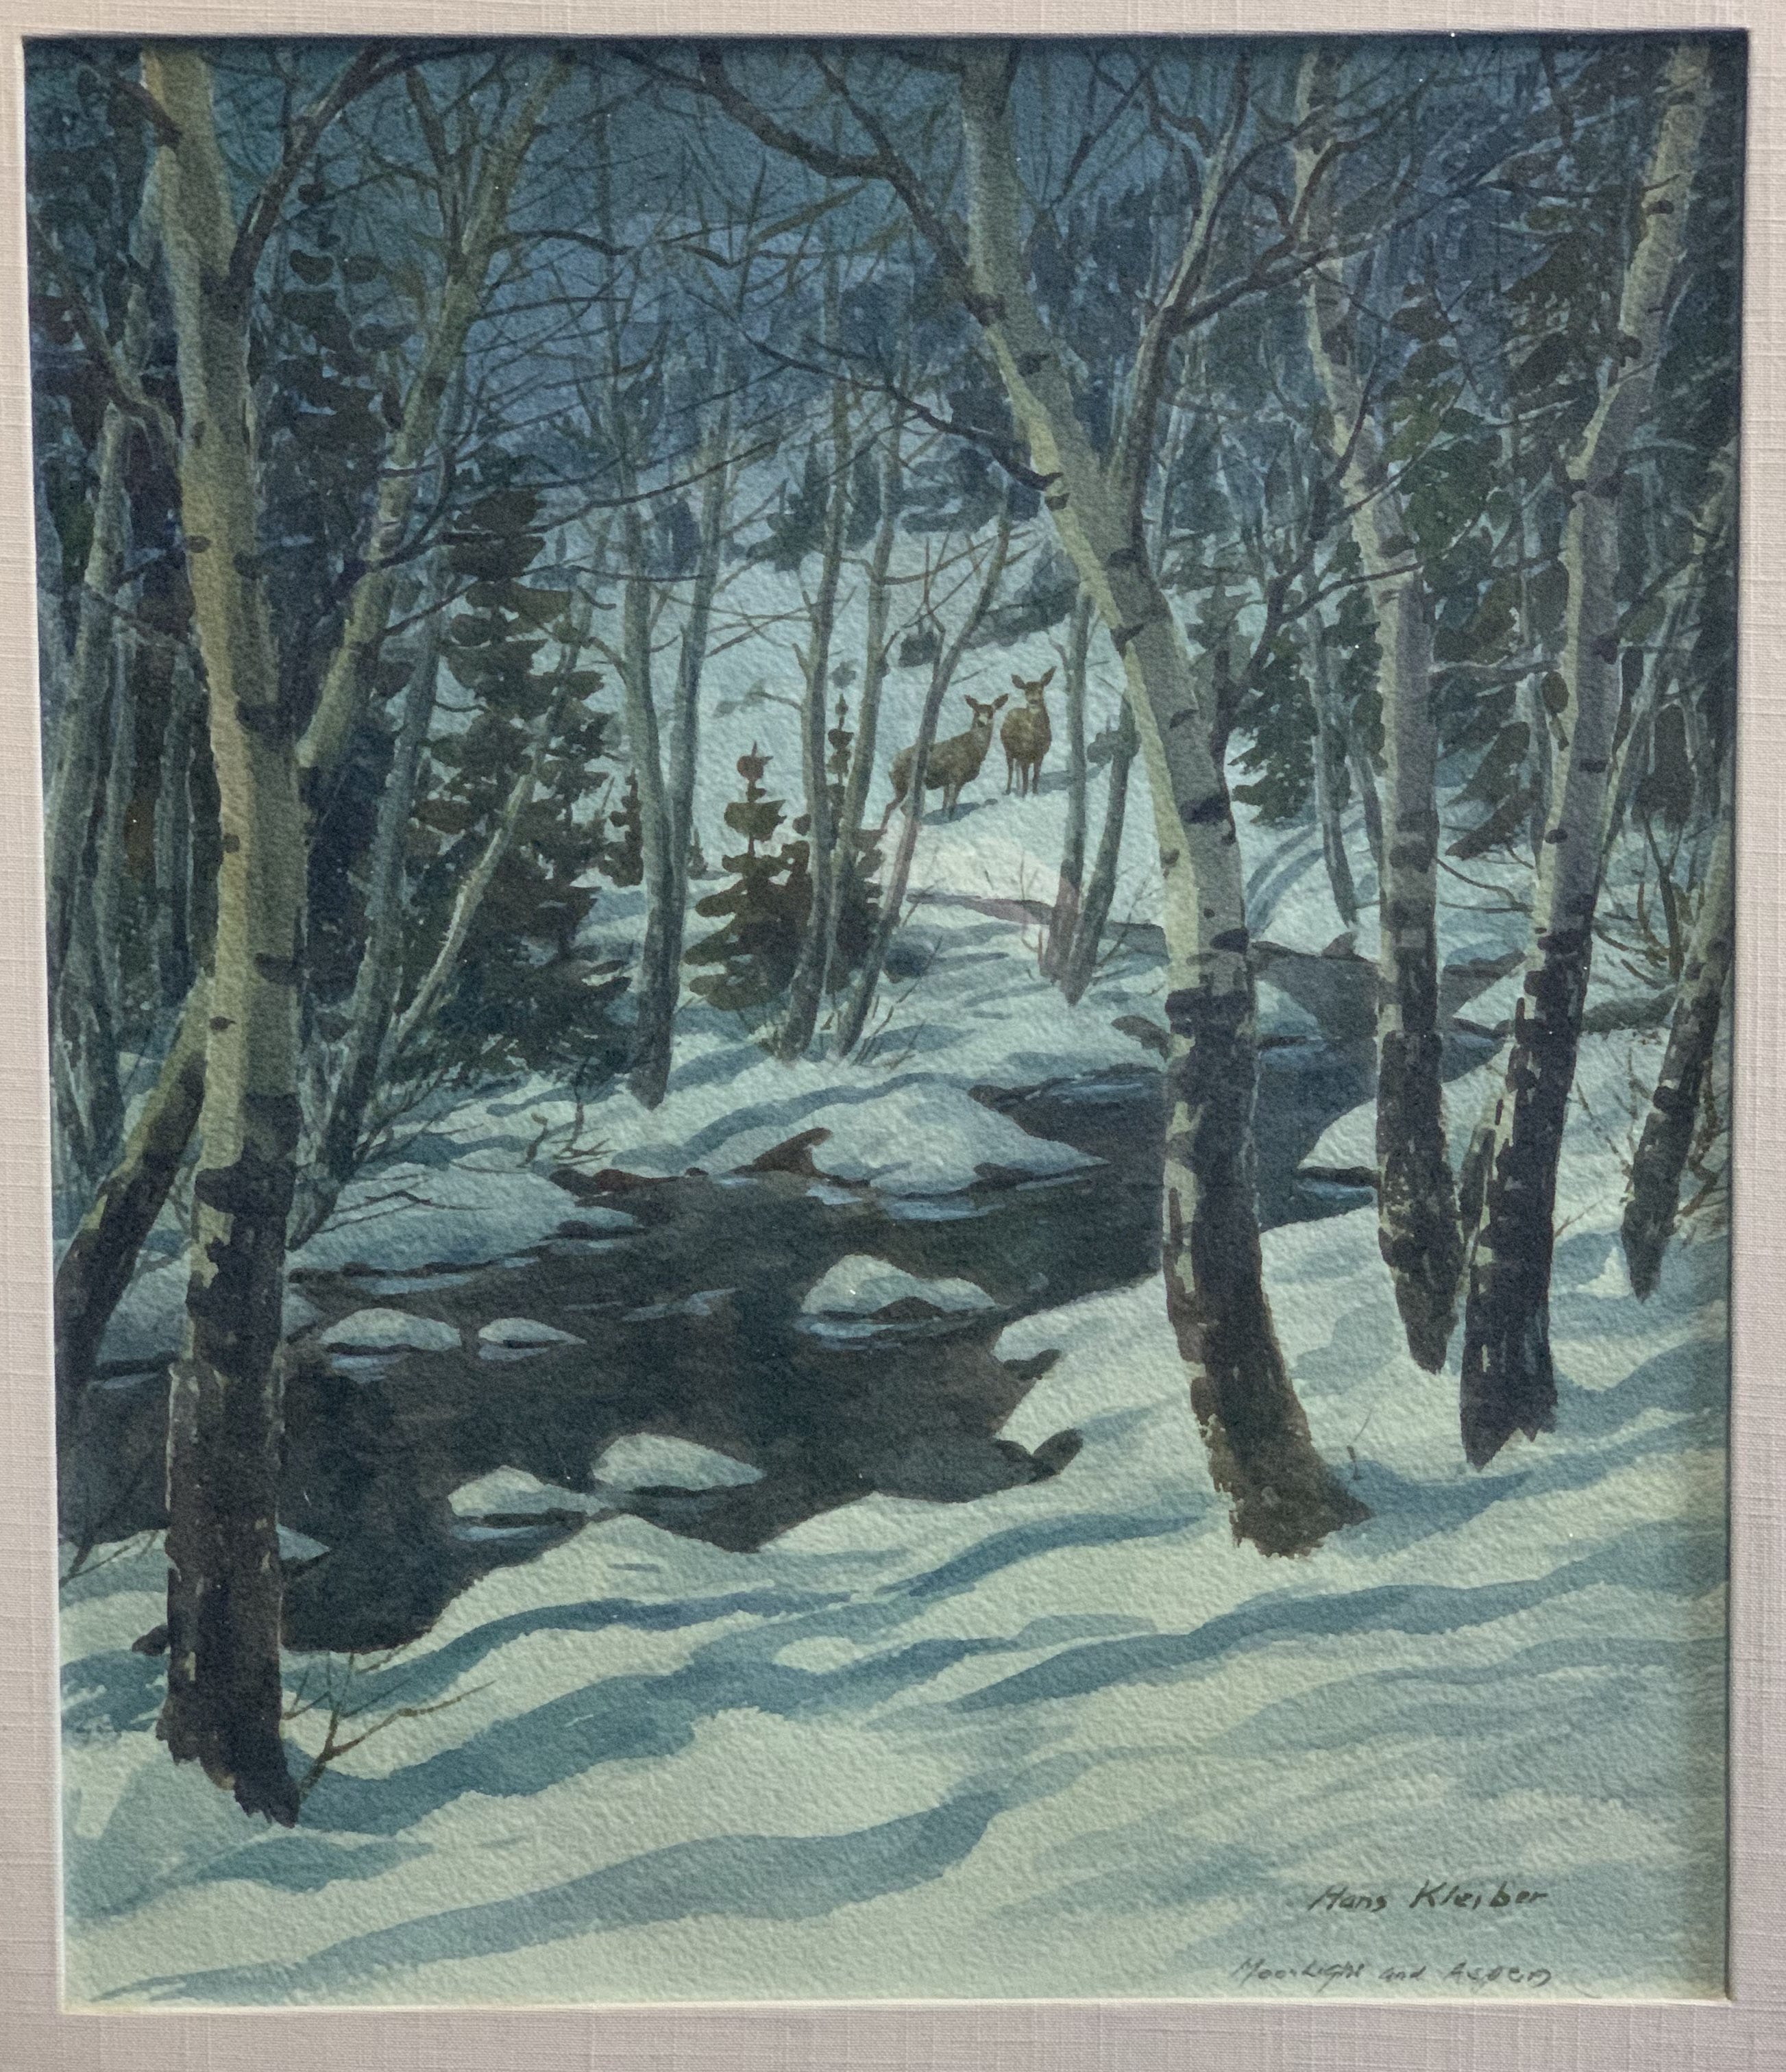 Lot 096: Hans Kleiber "Moonlight and Aspen" Watercolor on Paper